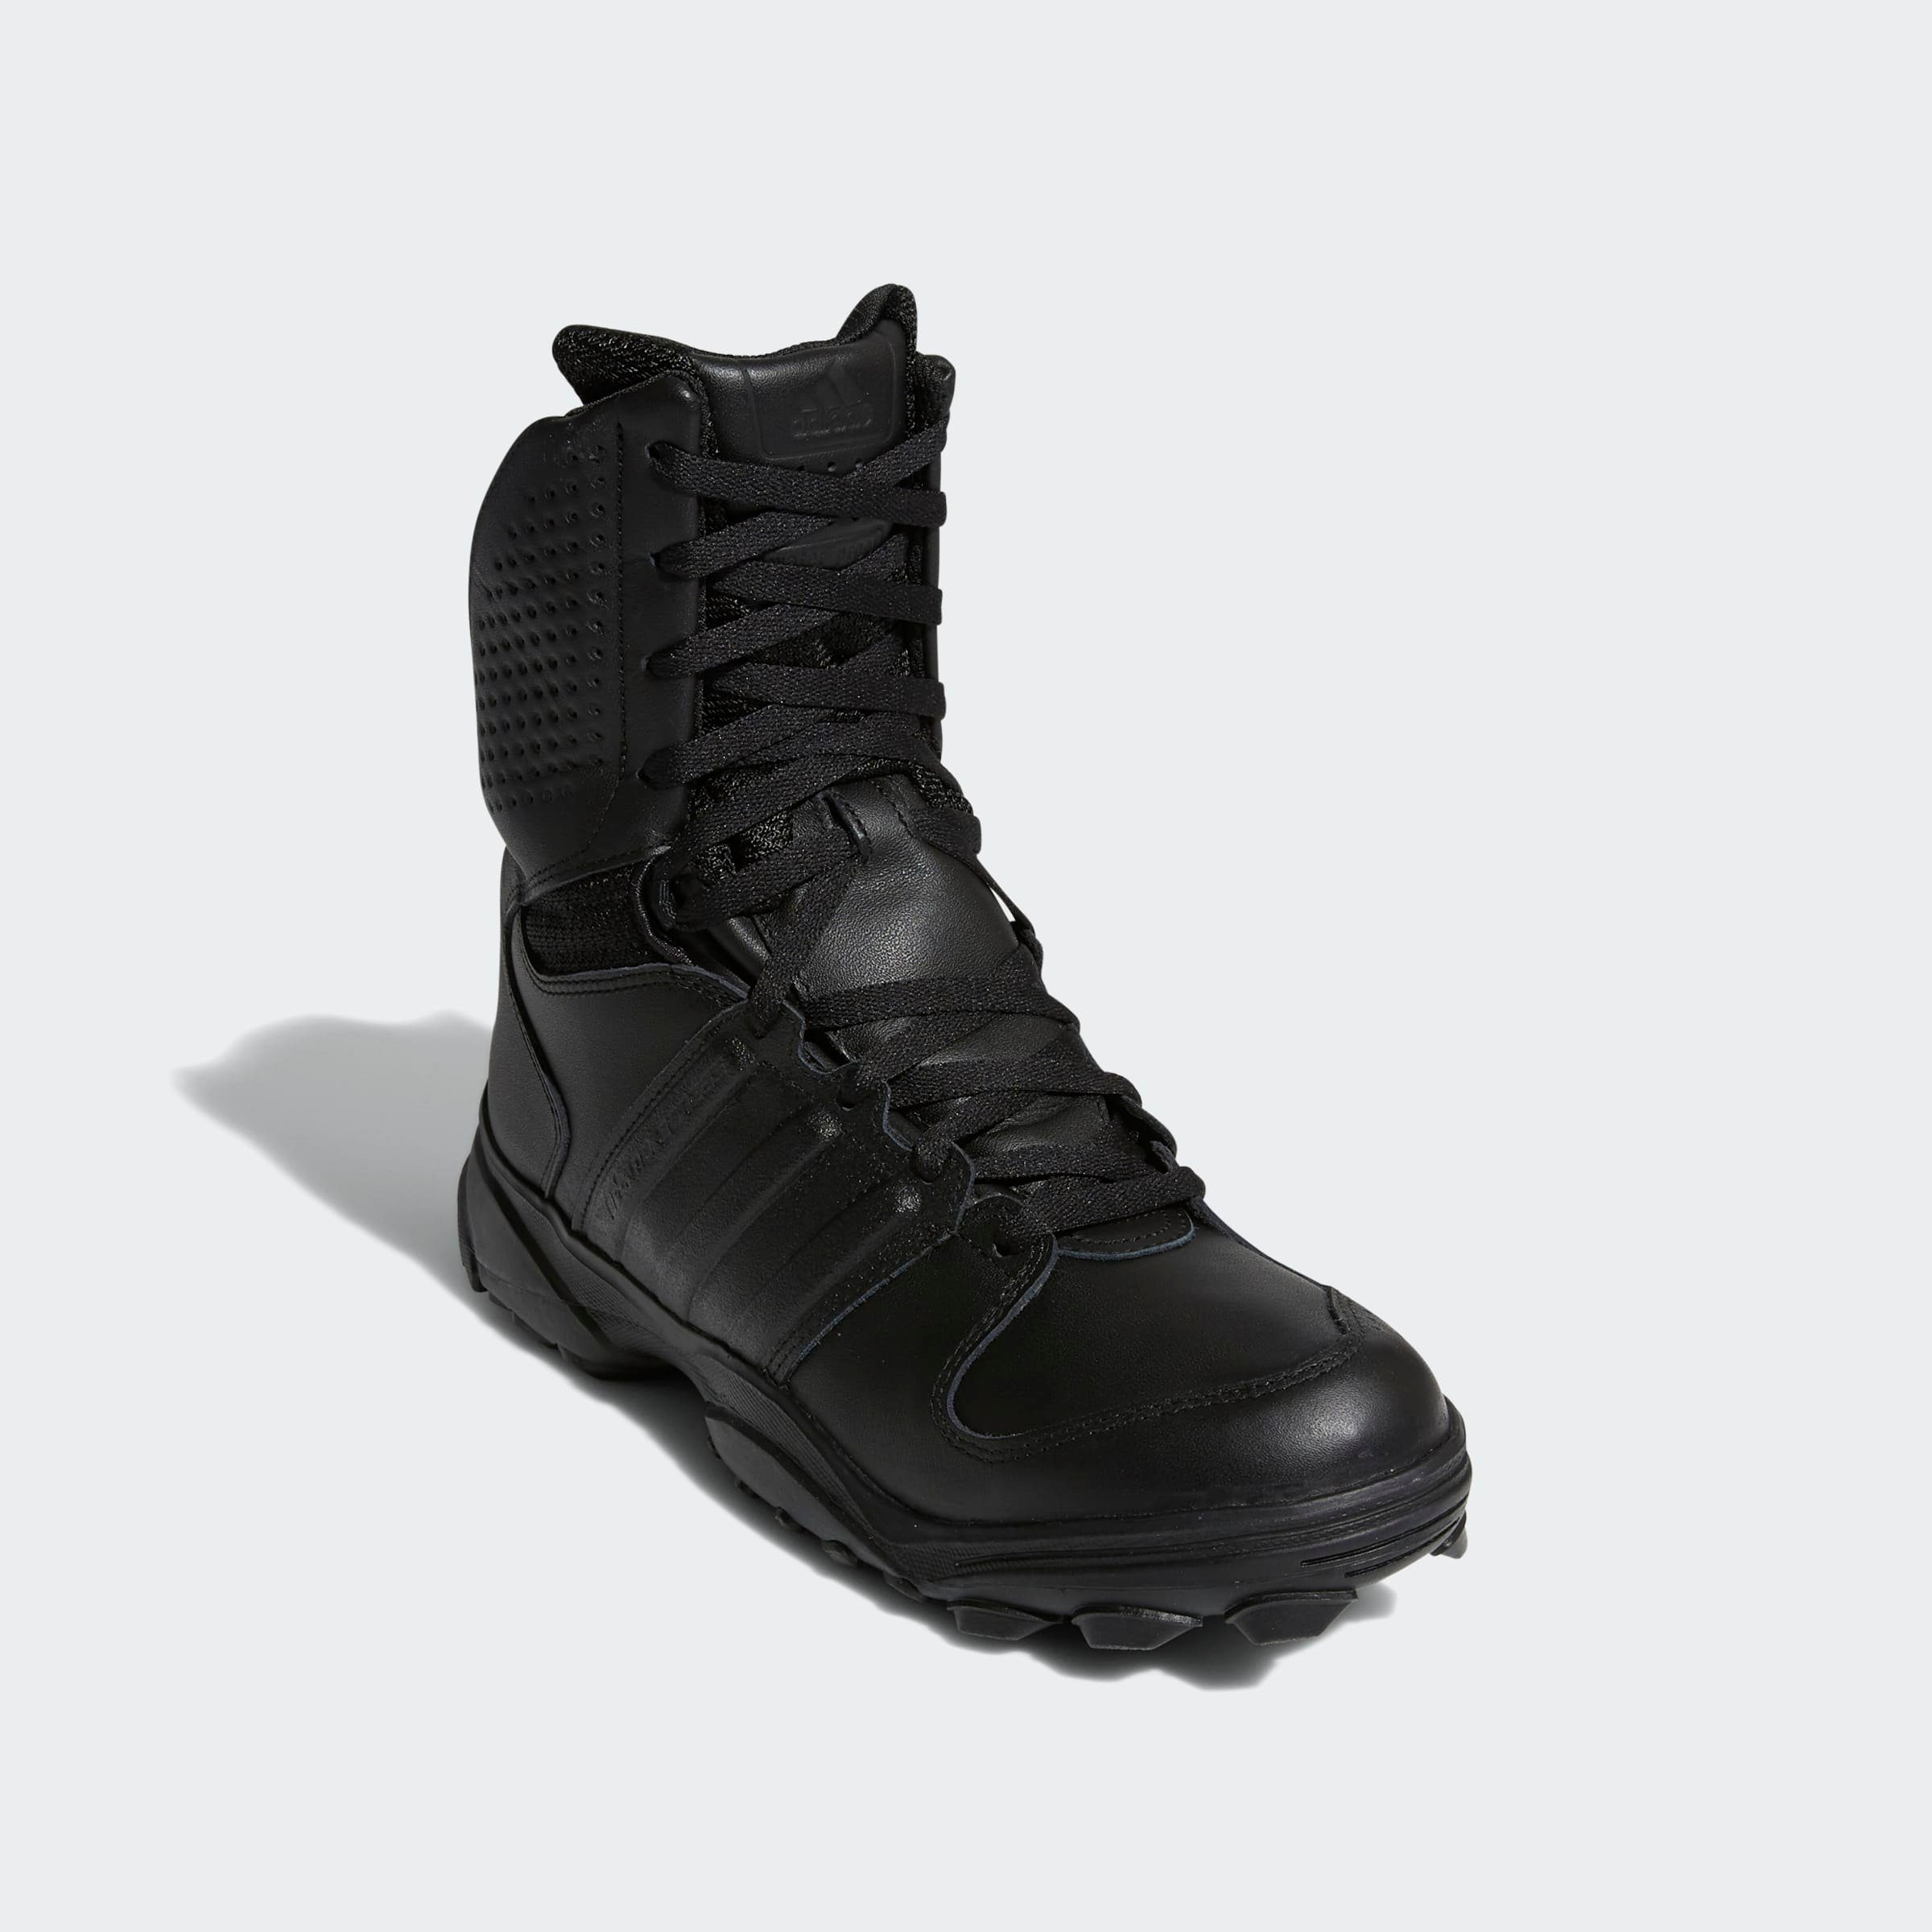 Herren Winterschuhe » Warme Schuhe Online Shop | OTTO